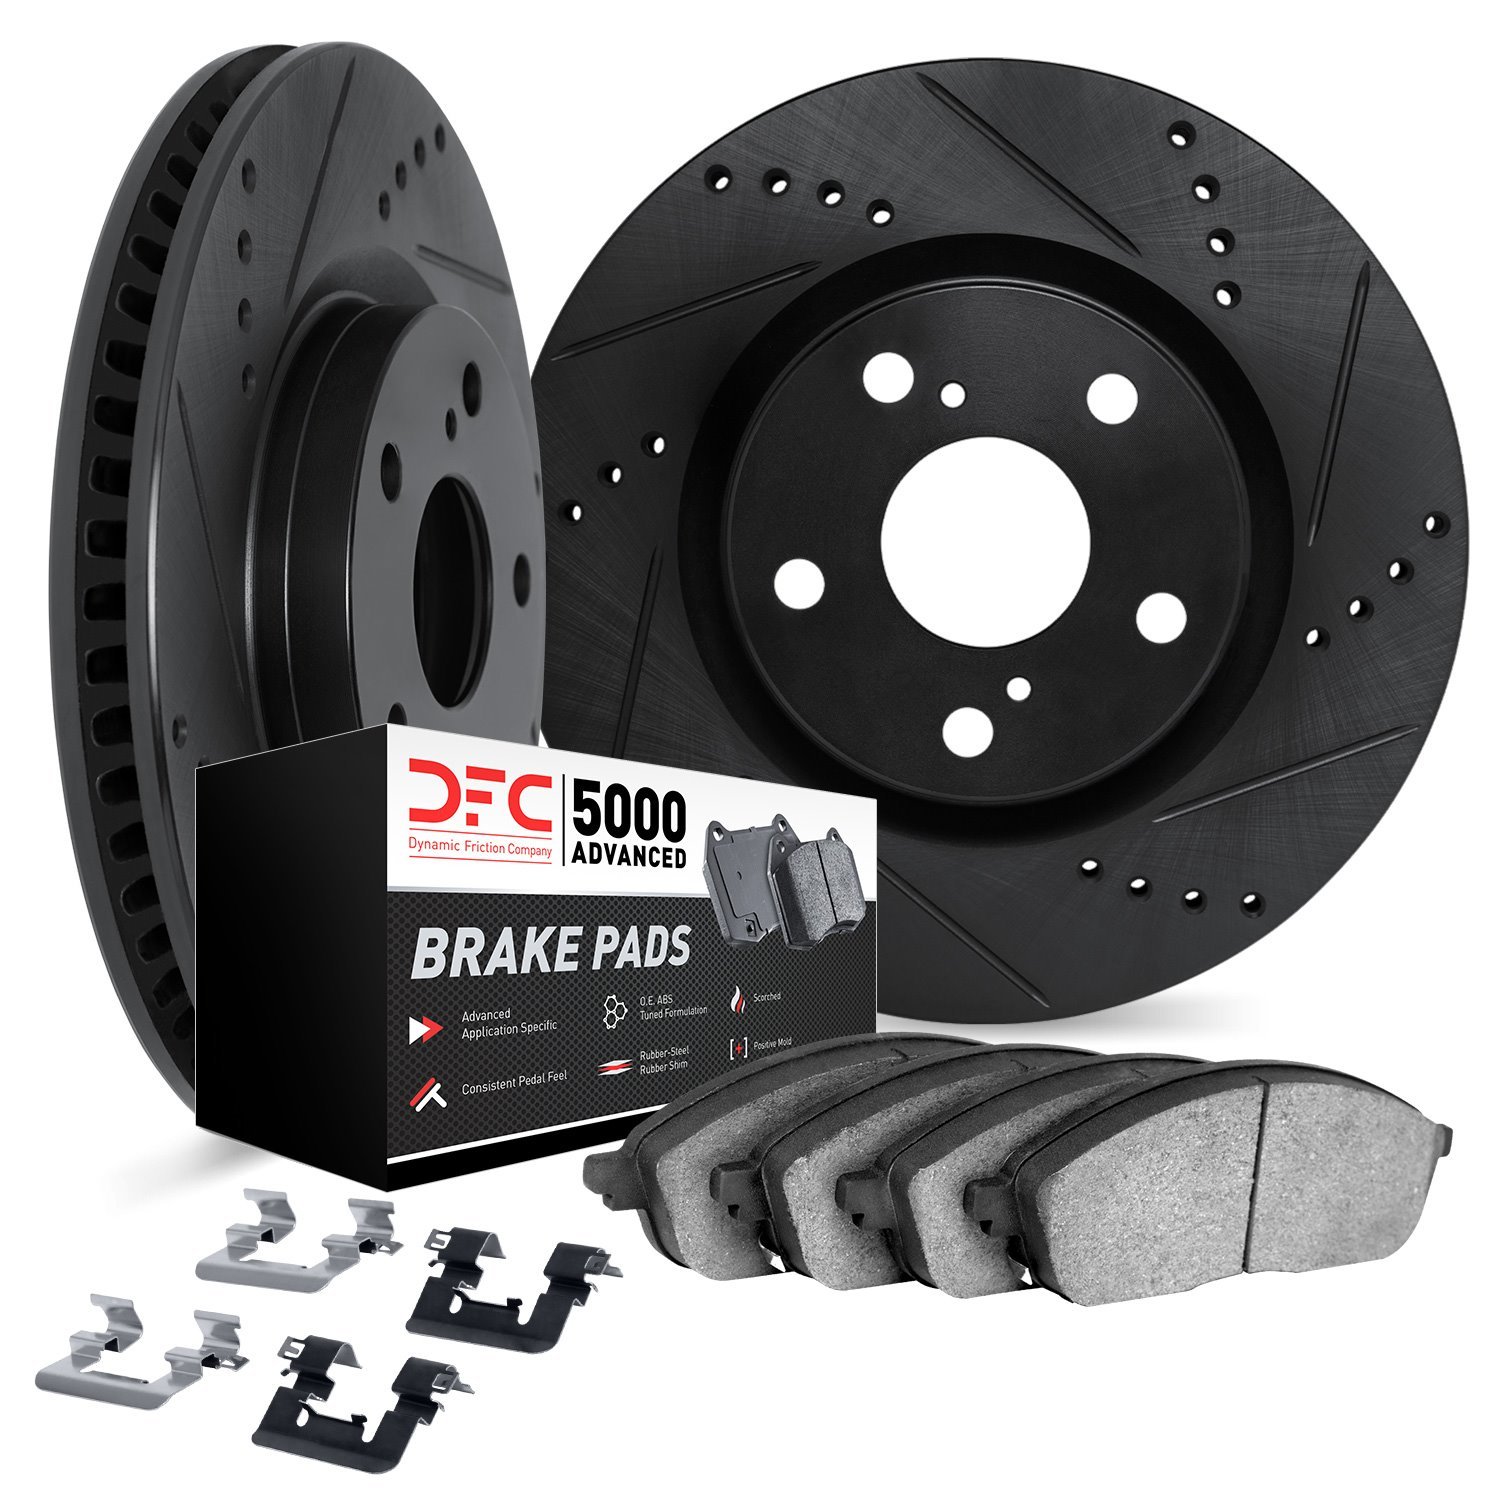 8512-54163 Drilled/Slotted Brake Rotors w/5000 Advanced Brake Pads Kit & Hardware [Black], 2010-2013 Ford/Lincoln/Mercury/Mazda,